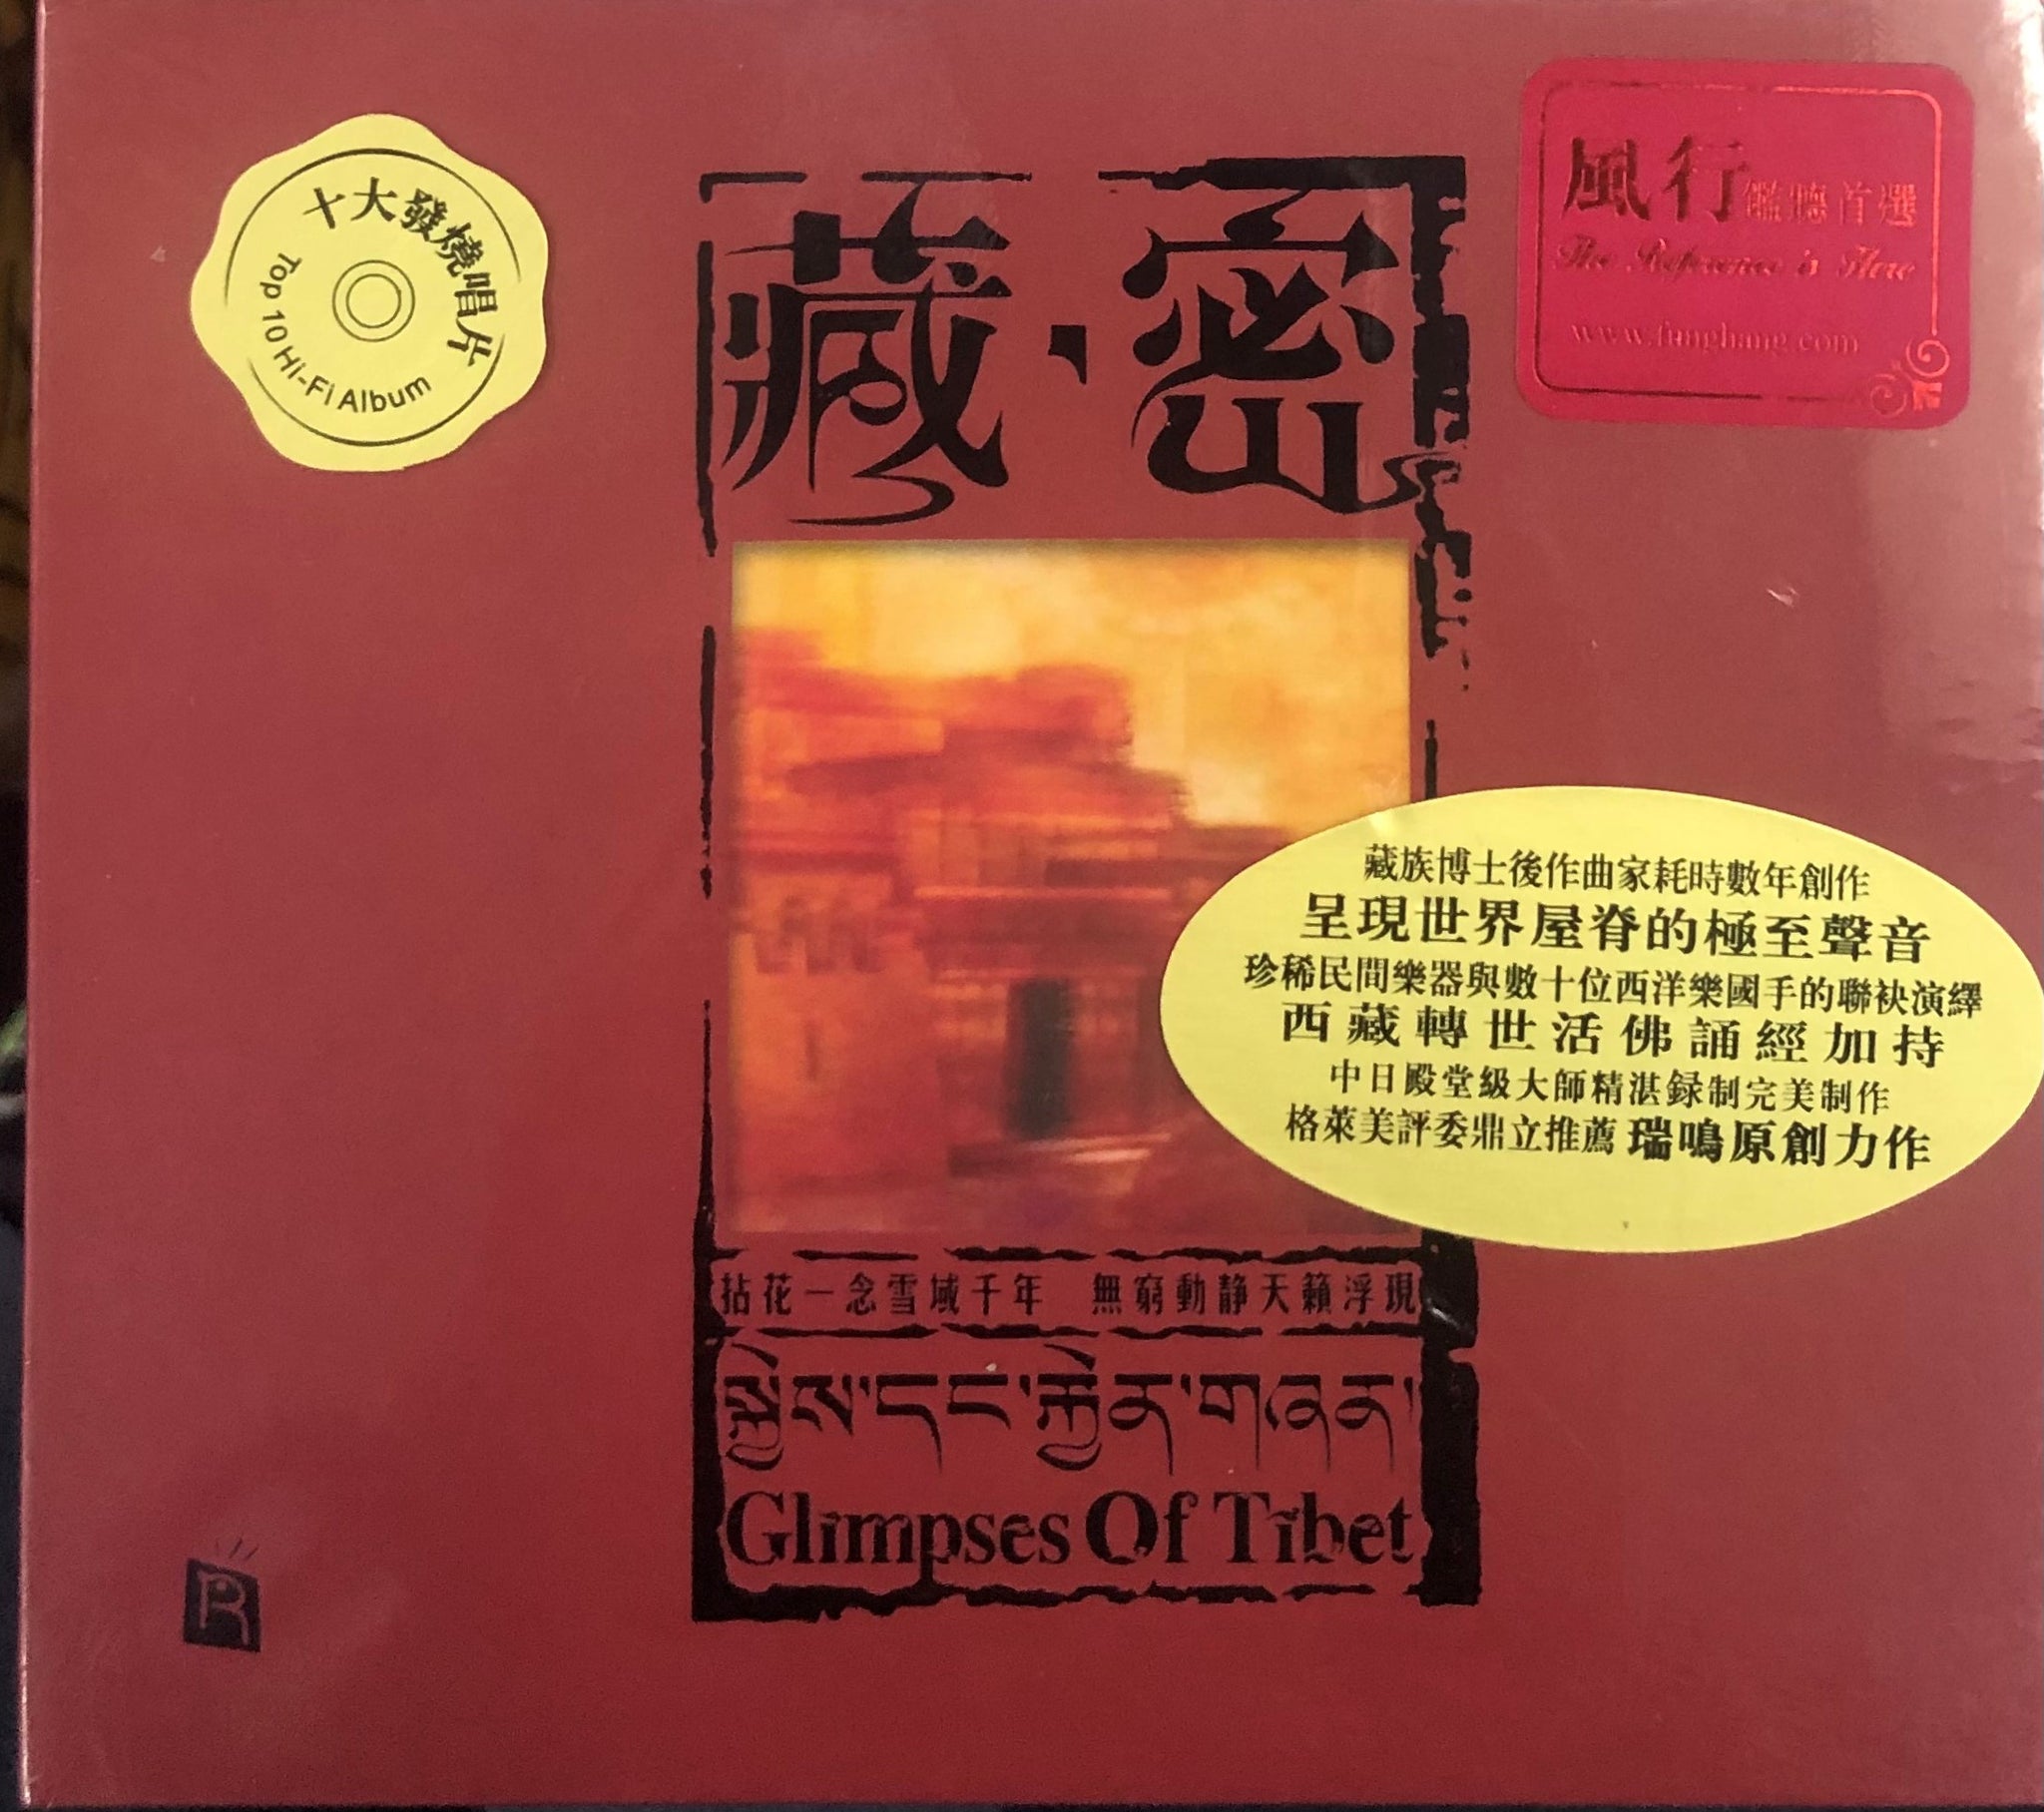 GLIMPSES OF TIBET 藏密 - WORLD MUSIC (CD)